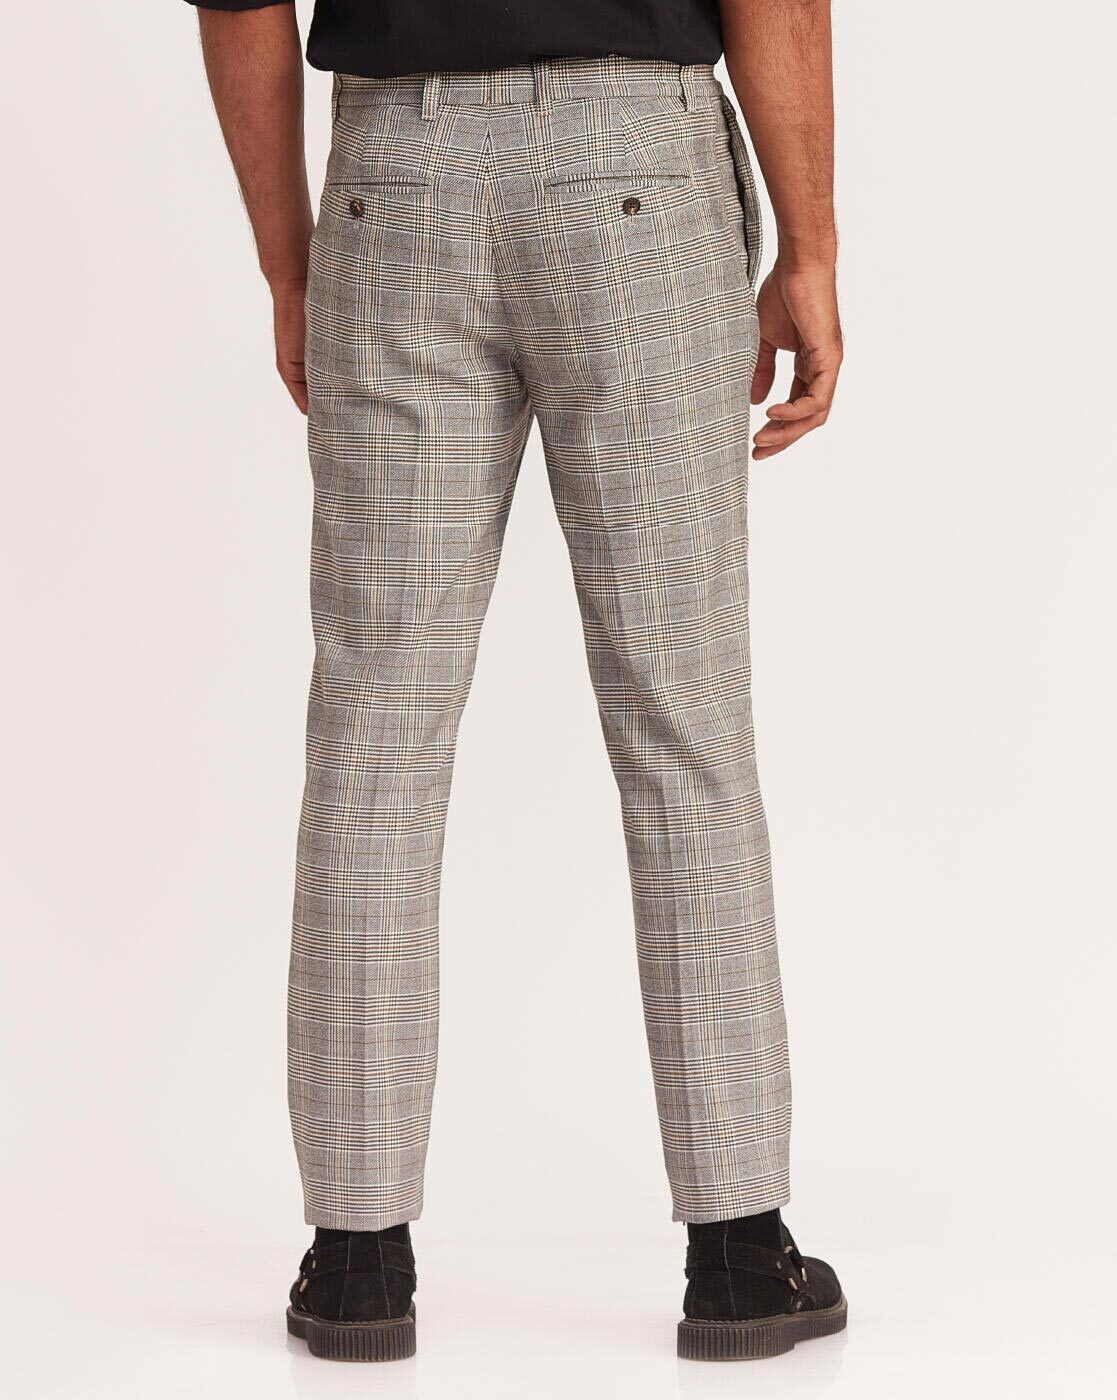 Buy WINTER SUN CHECKS Trousers  Pants for Men by TRUSER Online  Ajiocom